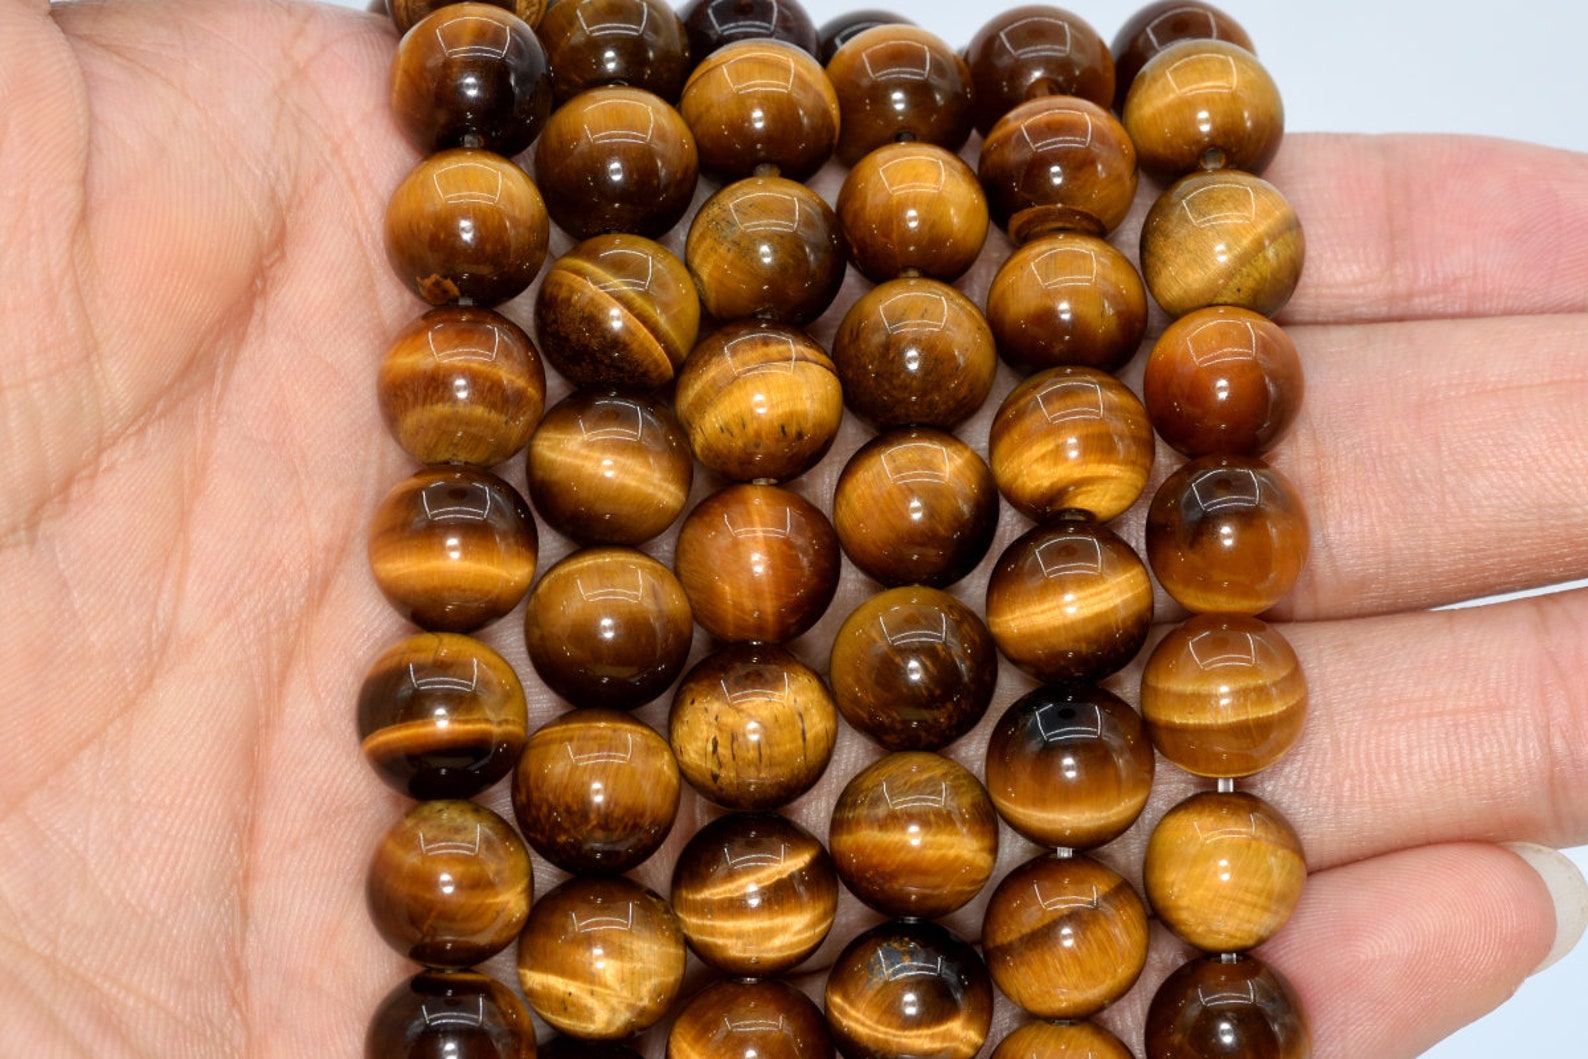 Yellow Tiger Eye Beads Grade AAA Genuine Natural Gemstone | Etsy